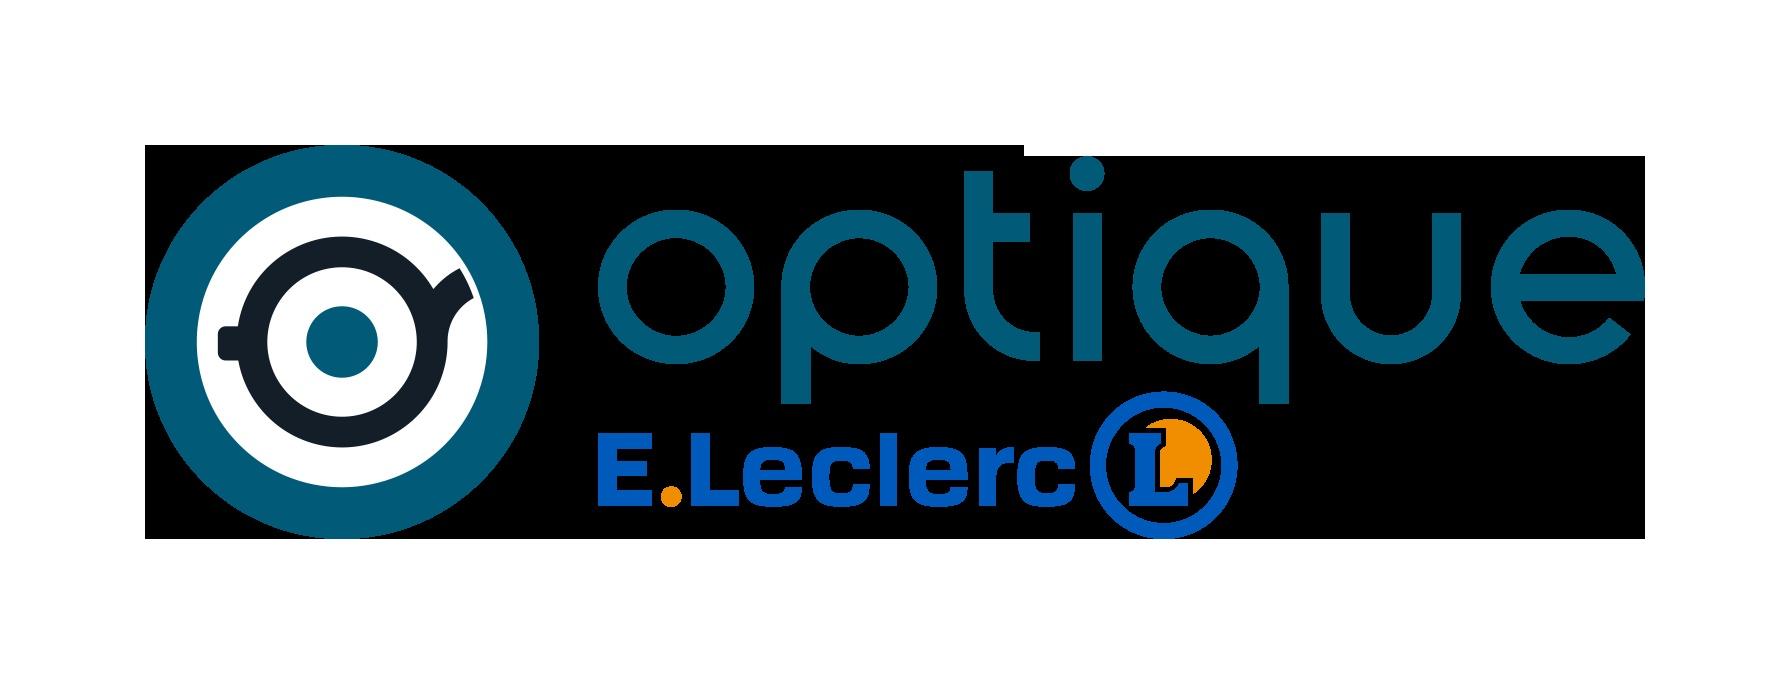 E.leclerc Optique Angoulême